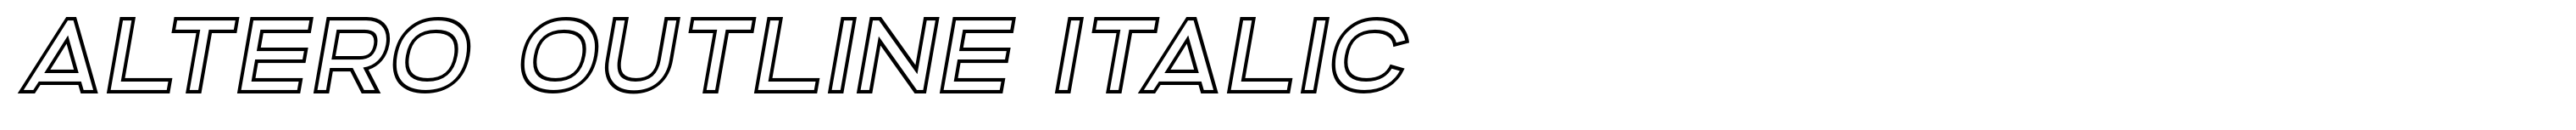 Altero Outline Italic